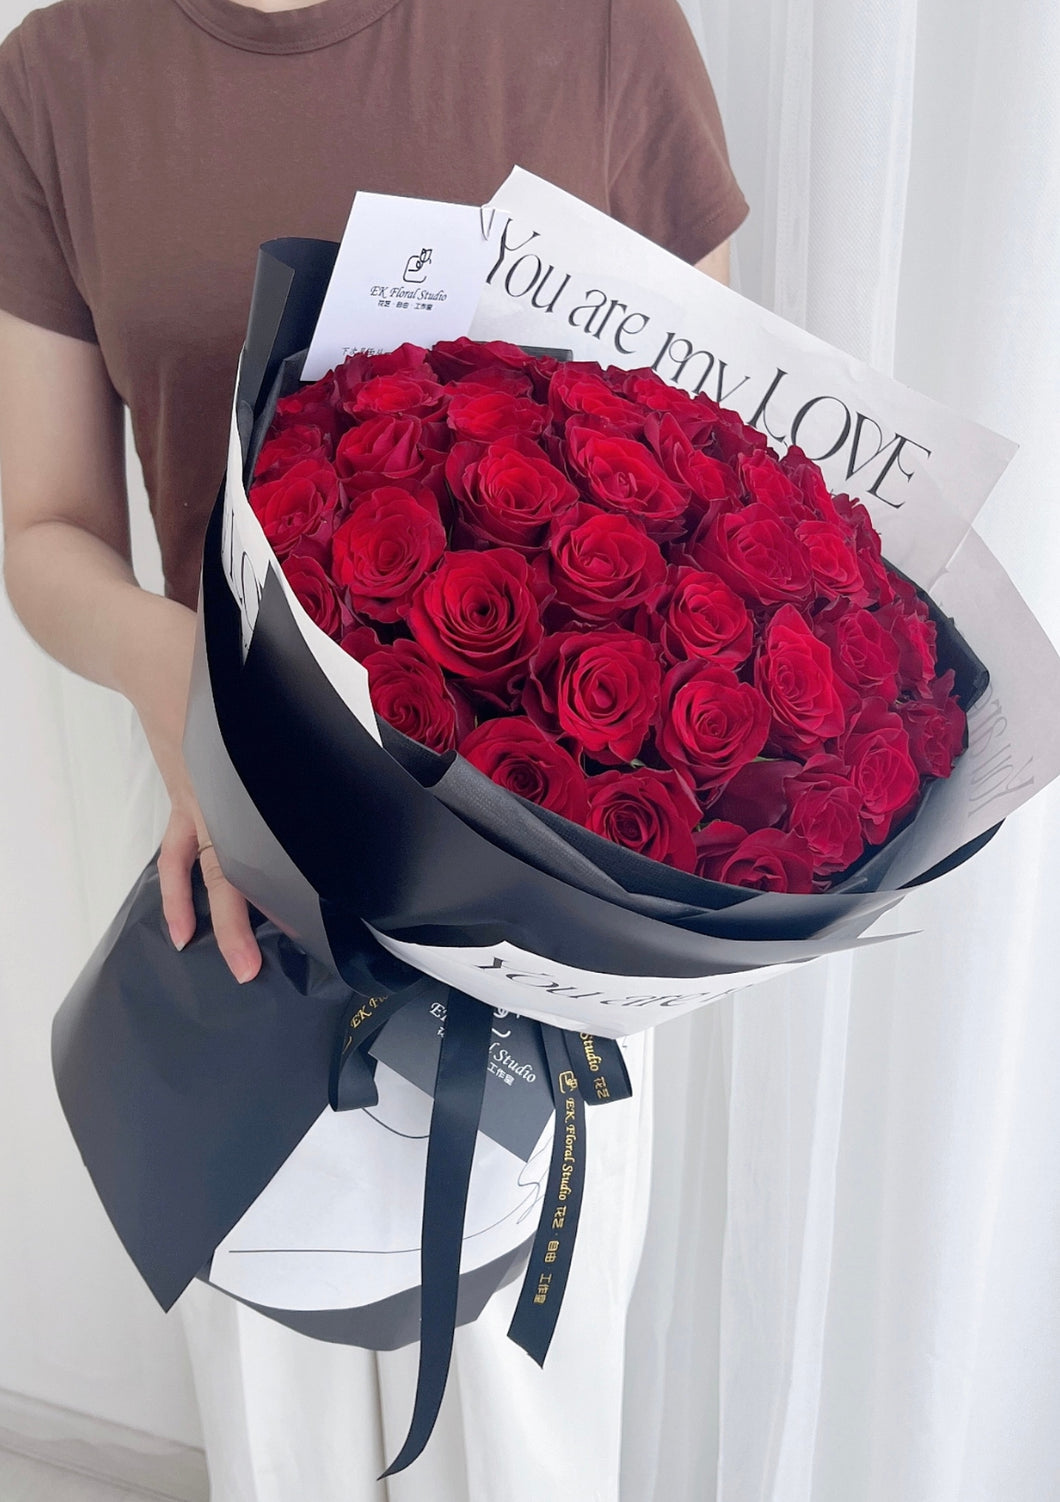 52 Red Fresh Rose Bouquet (Love You Forever) 52朵鲜花红玫瑰花束(情定终身)